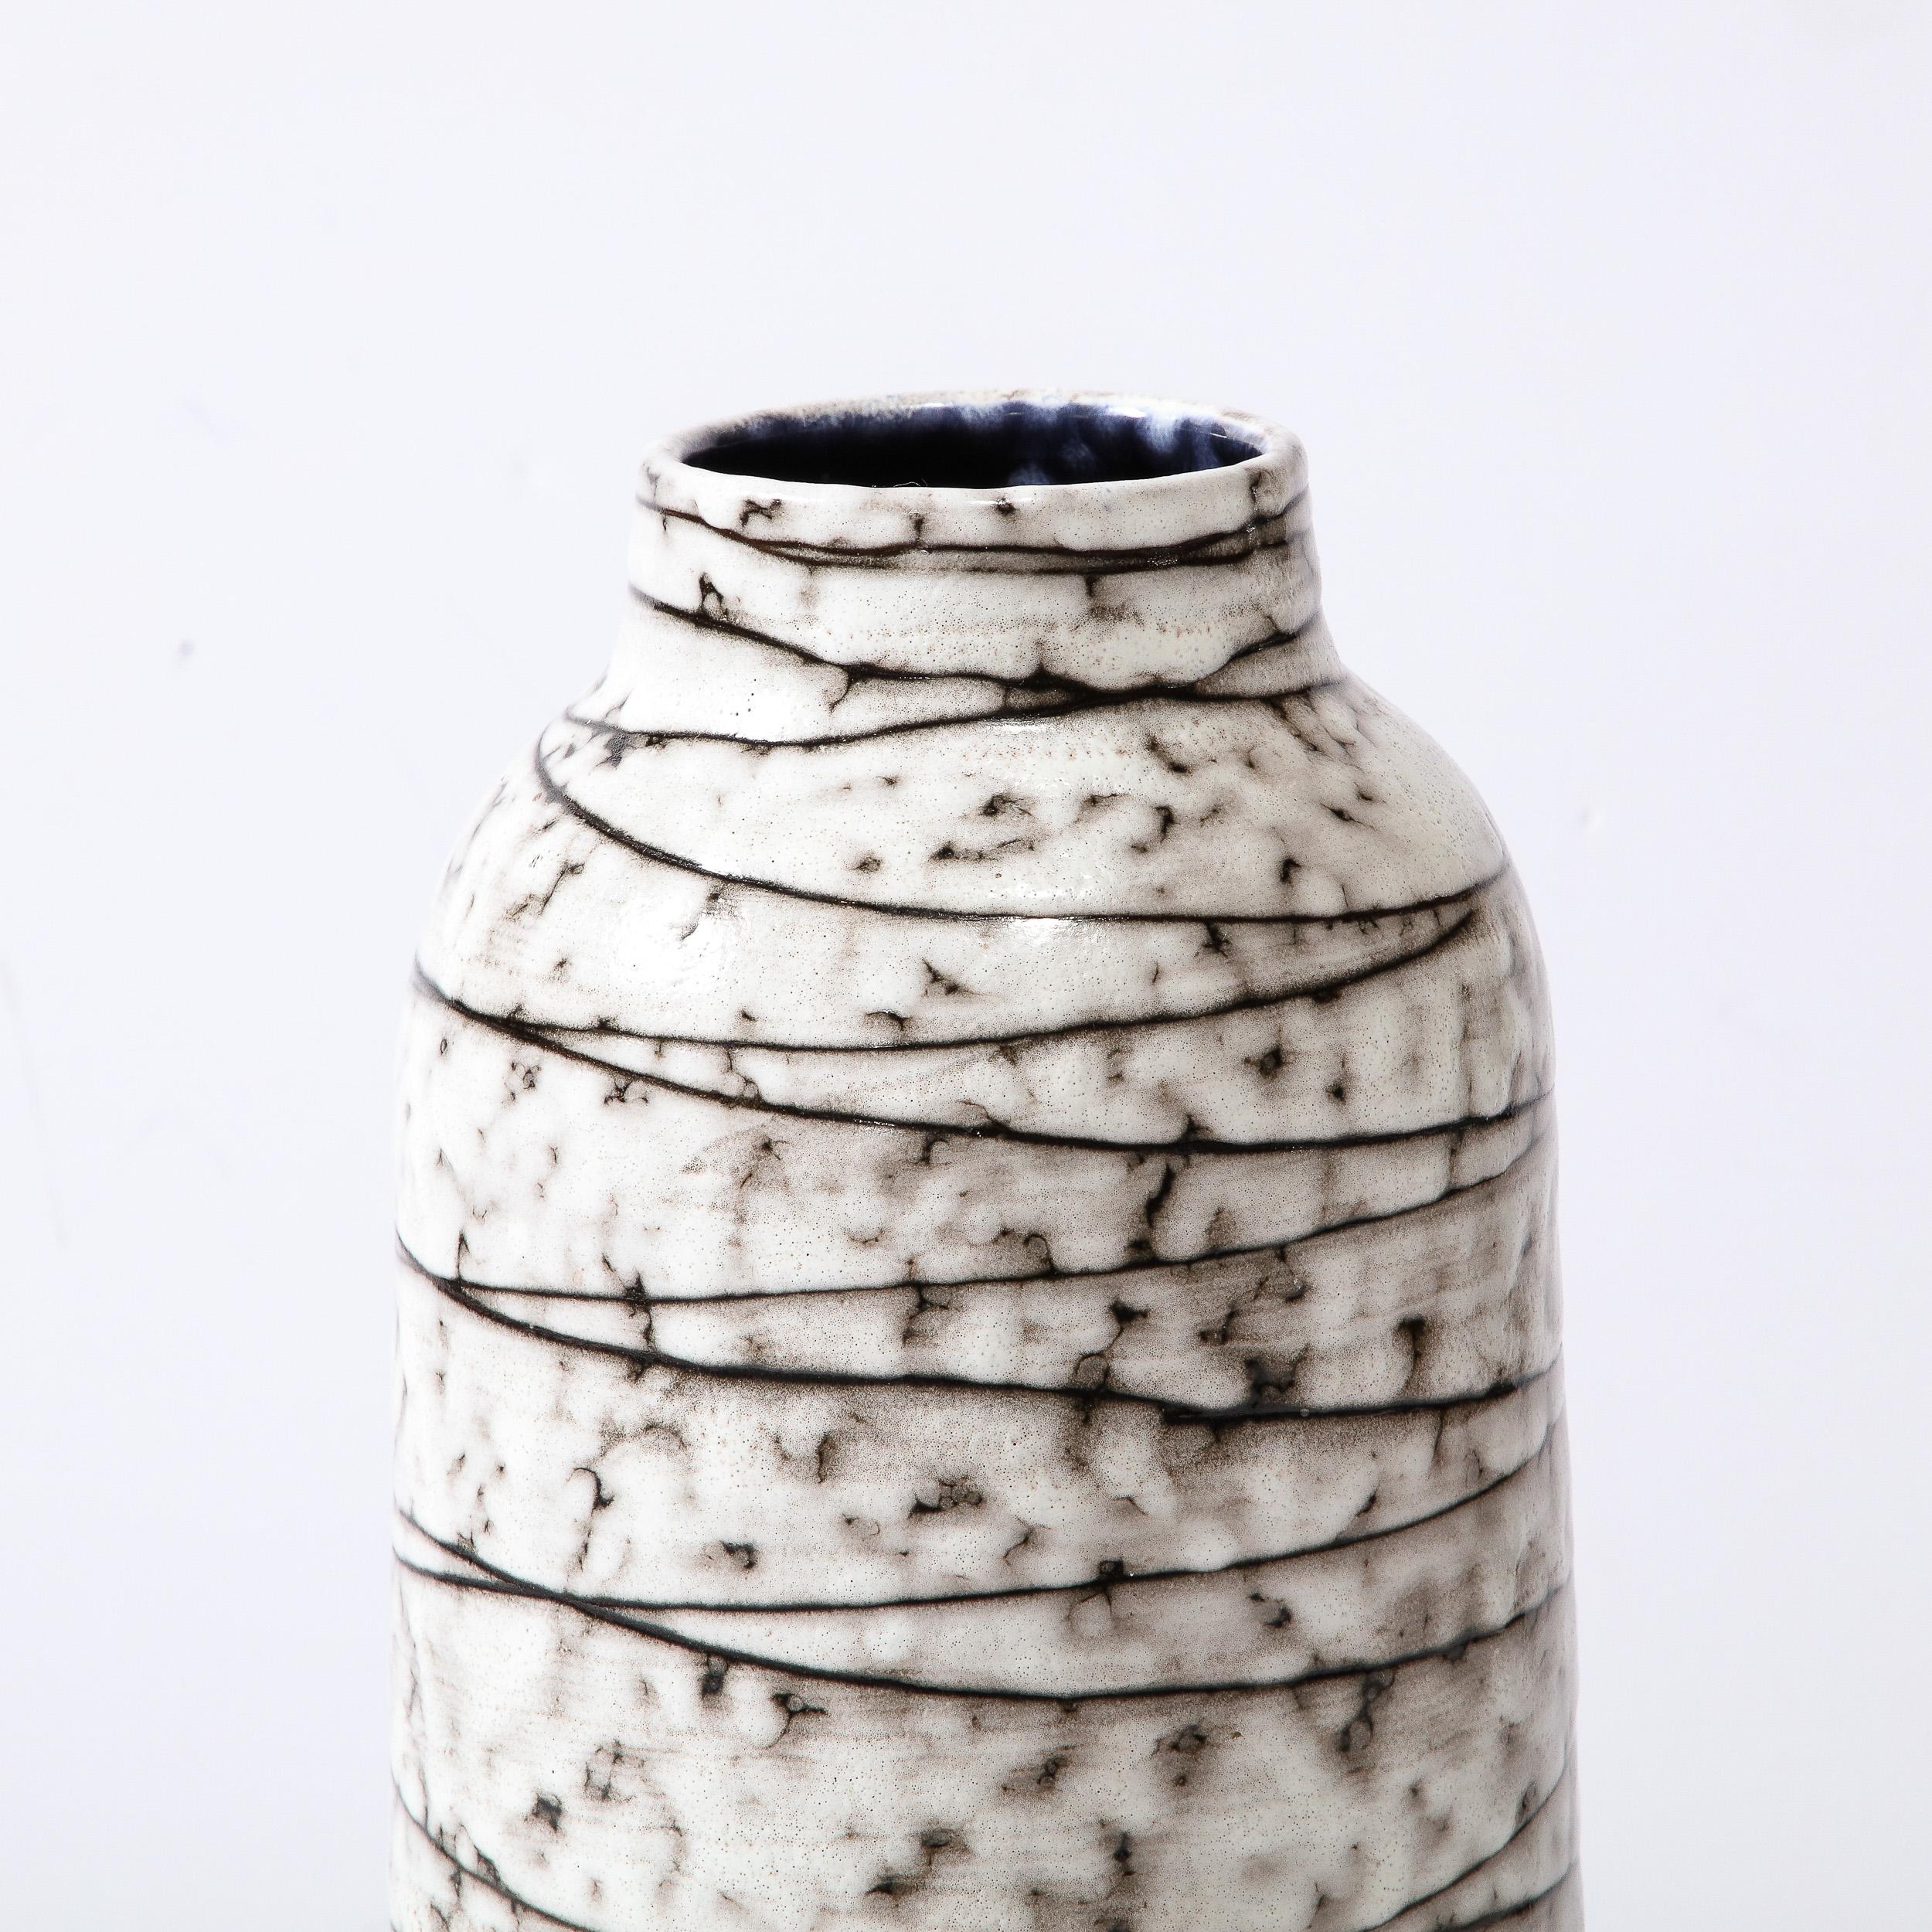 Glazed Mid-Century Modernist White and Earth Toned Horizontally Striated Ceramic Vase For Sale